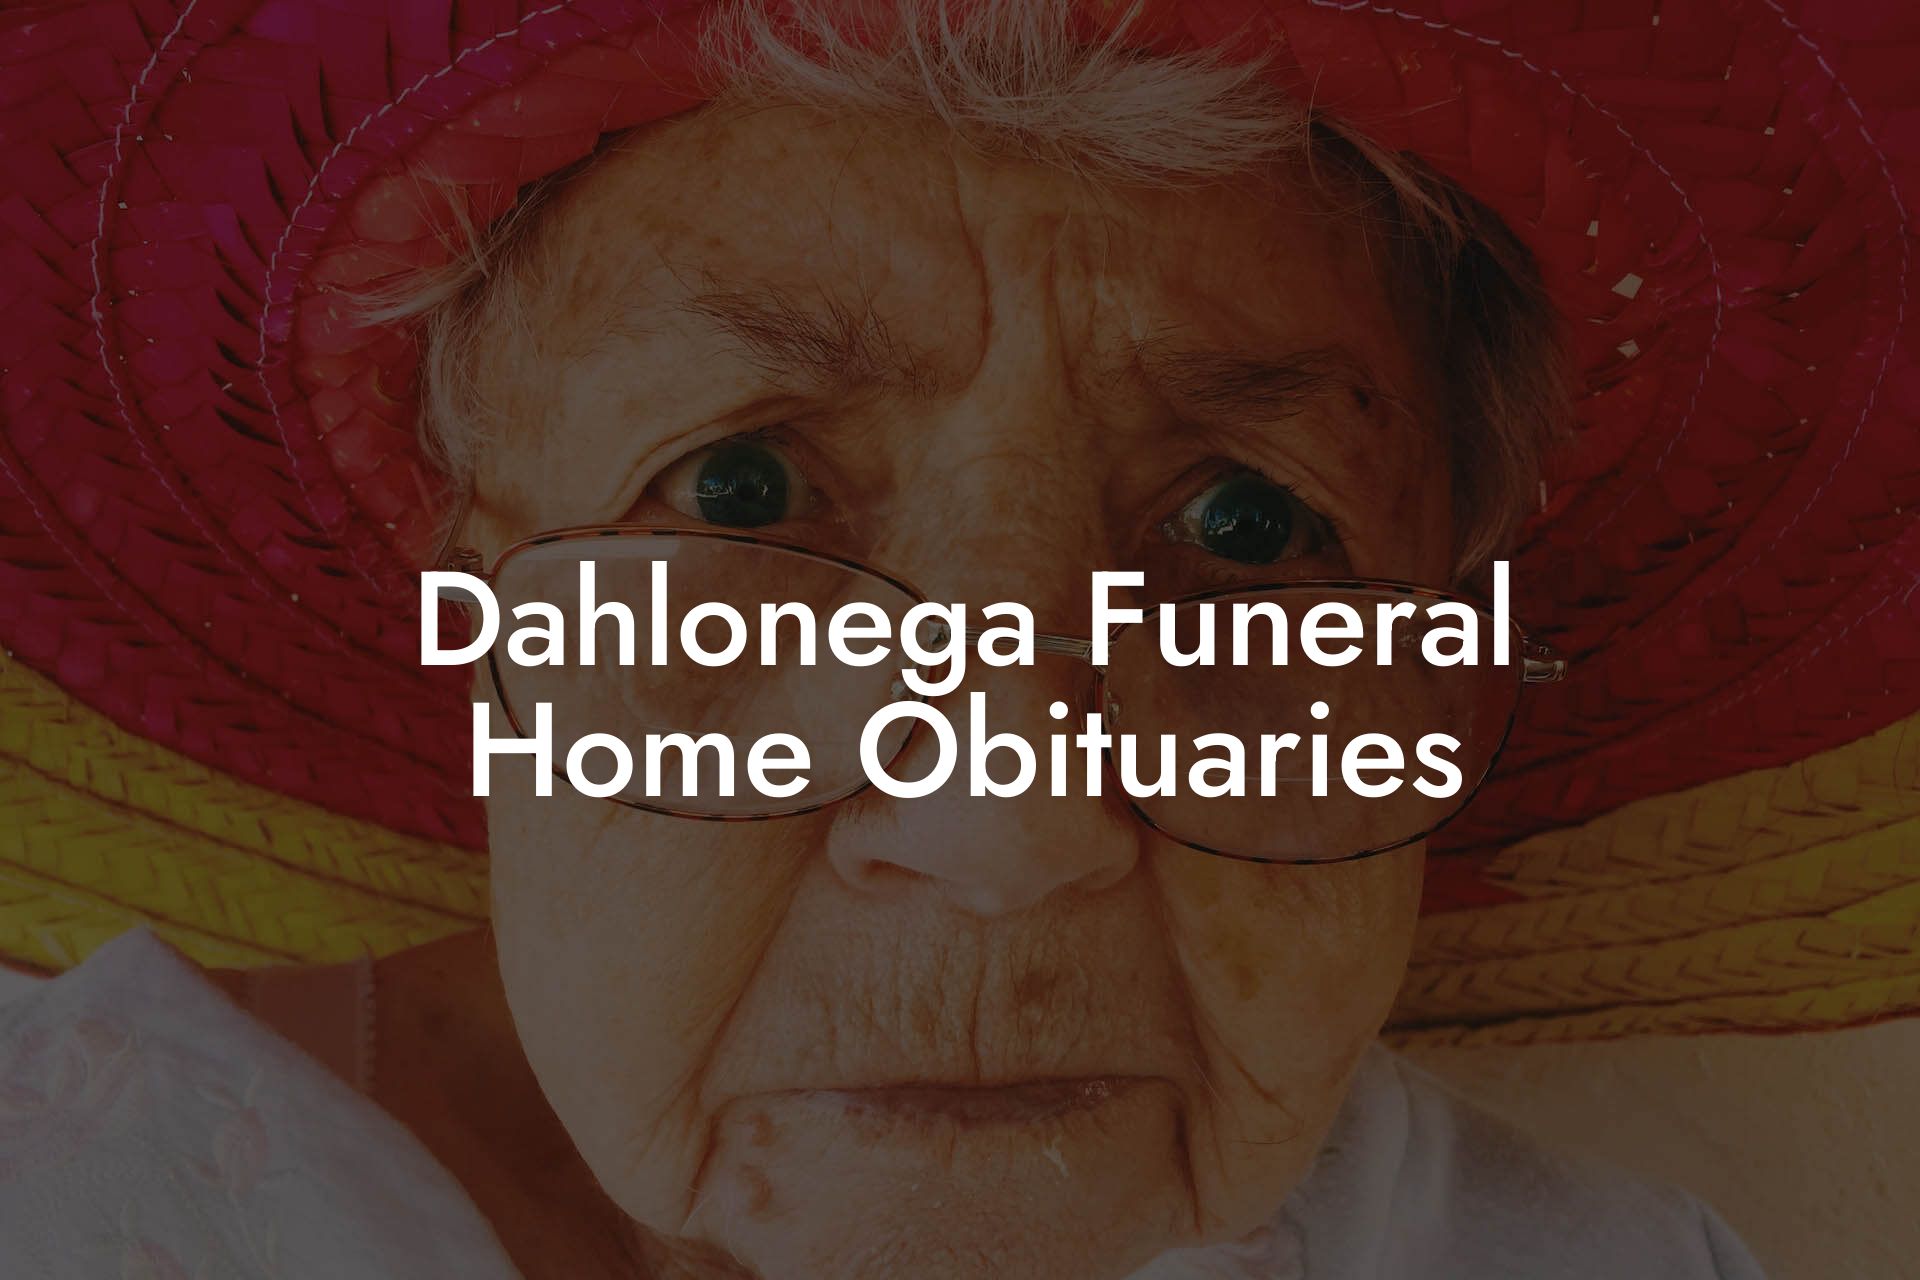 Dahlonega Funeral Home Obituaries